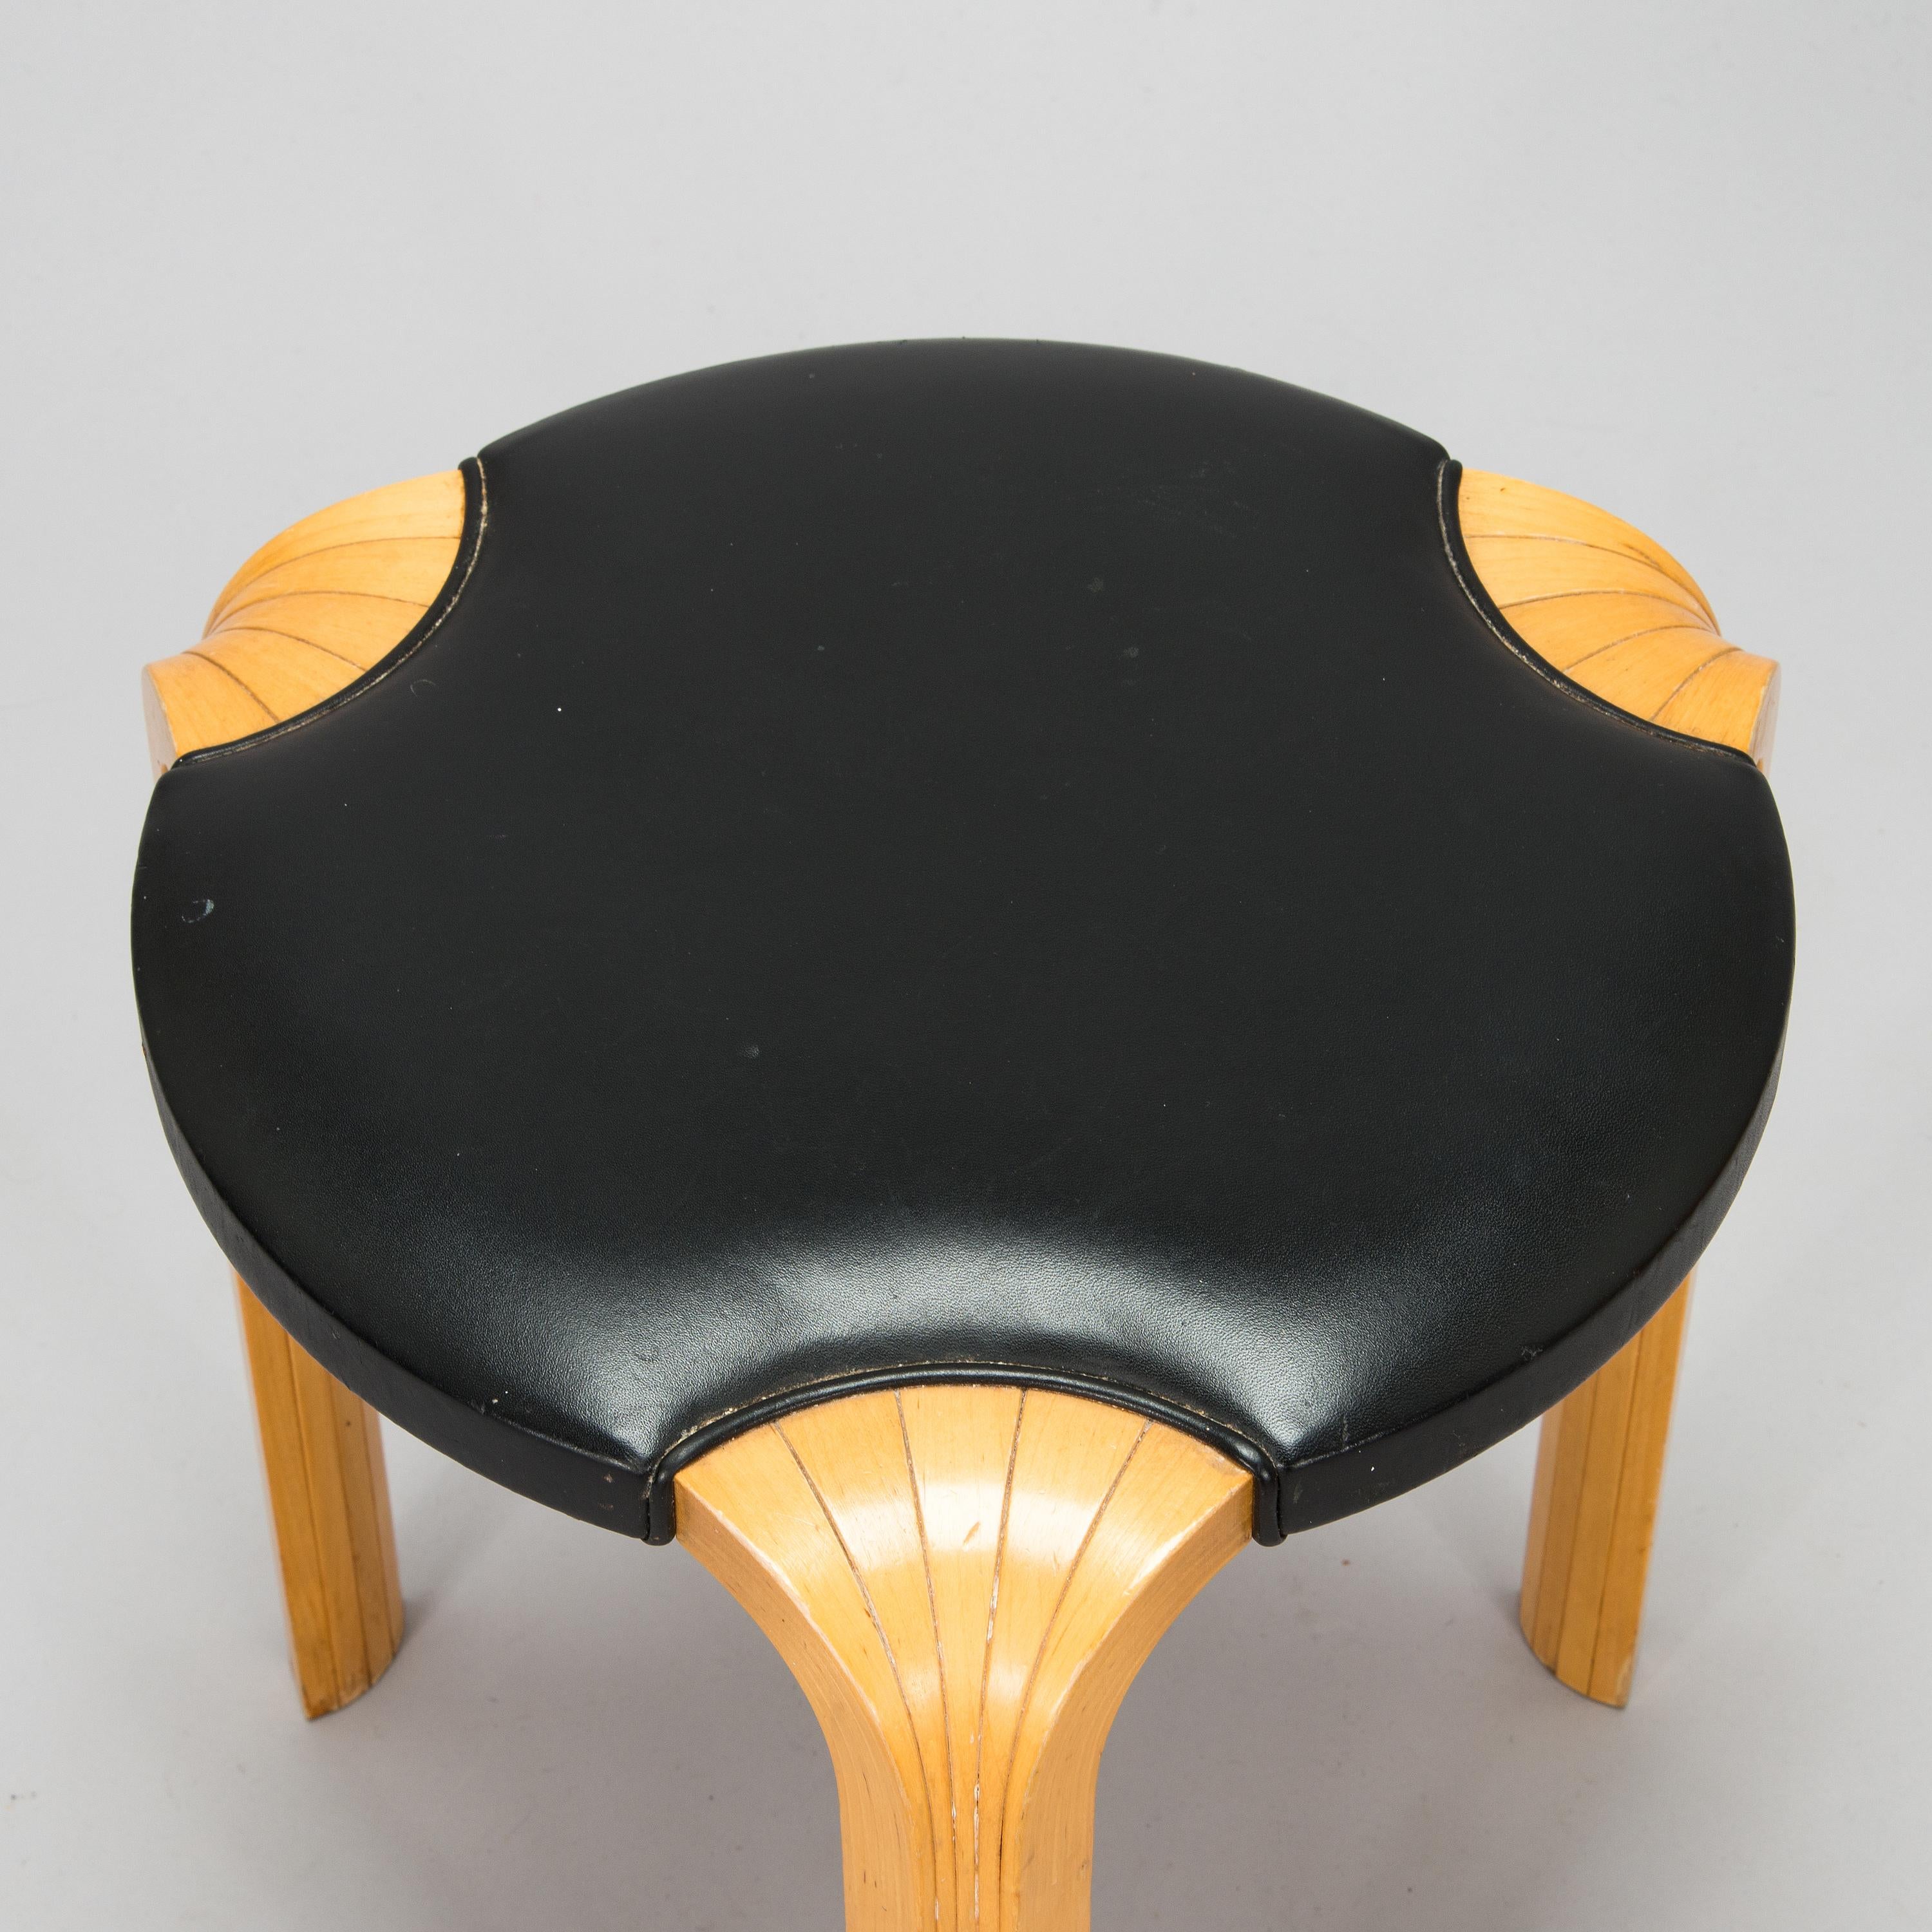 Alvar Aalto, 1960s 'X600' stool for Artek.

Fan-shaped birch legs, upholstered black leather seat. Measure: height 45 cm. Manufacturer's stamp.